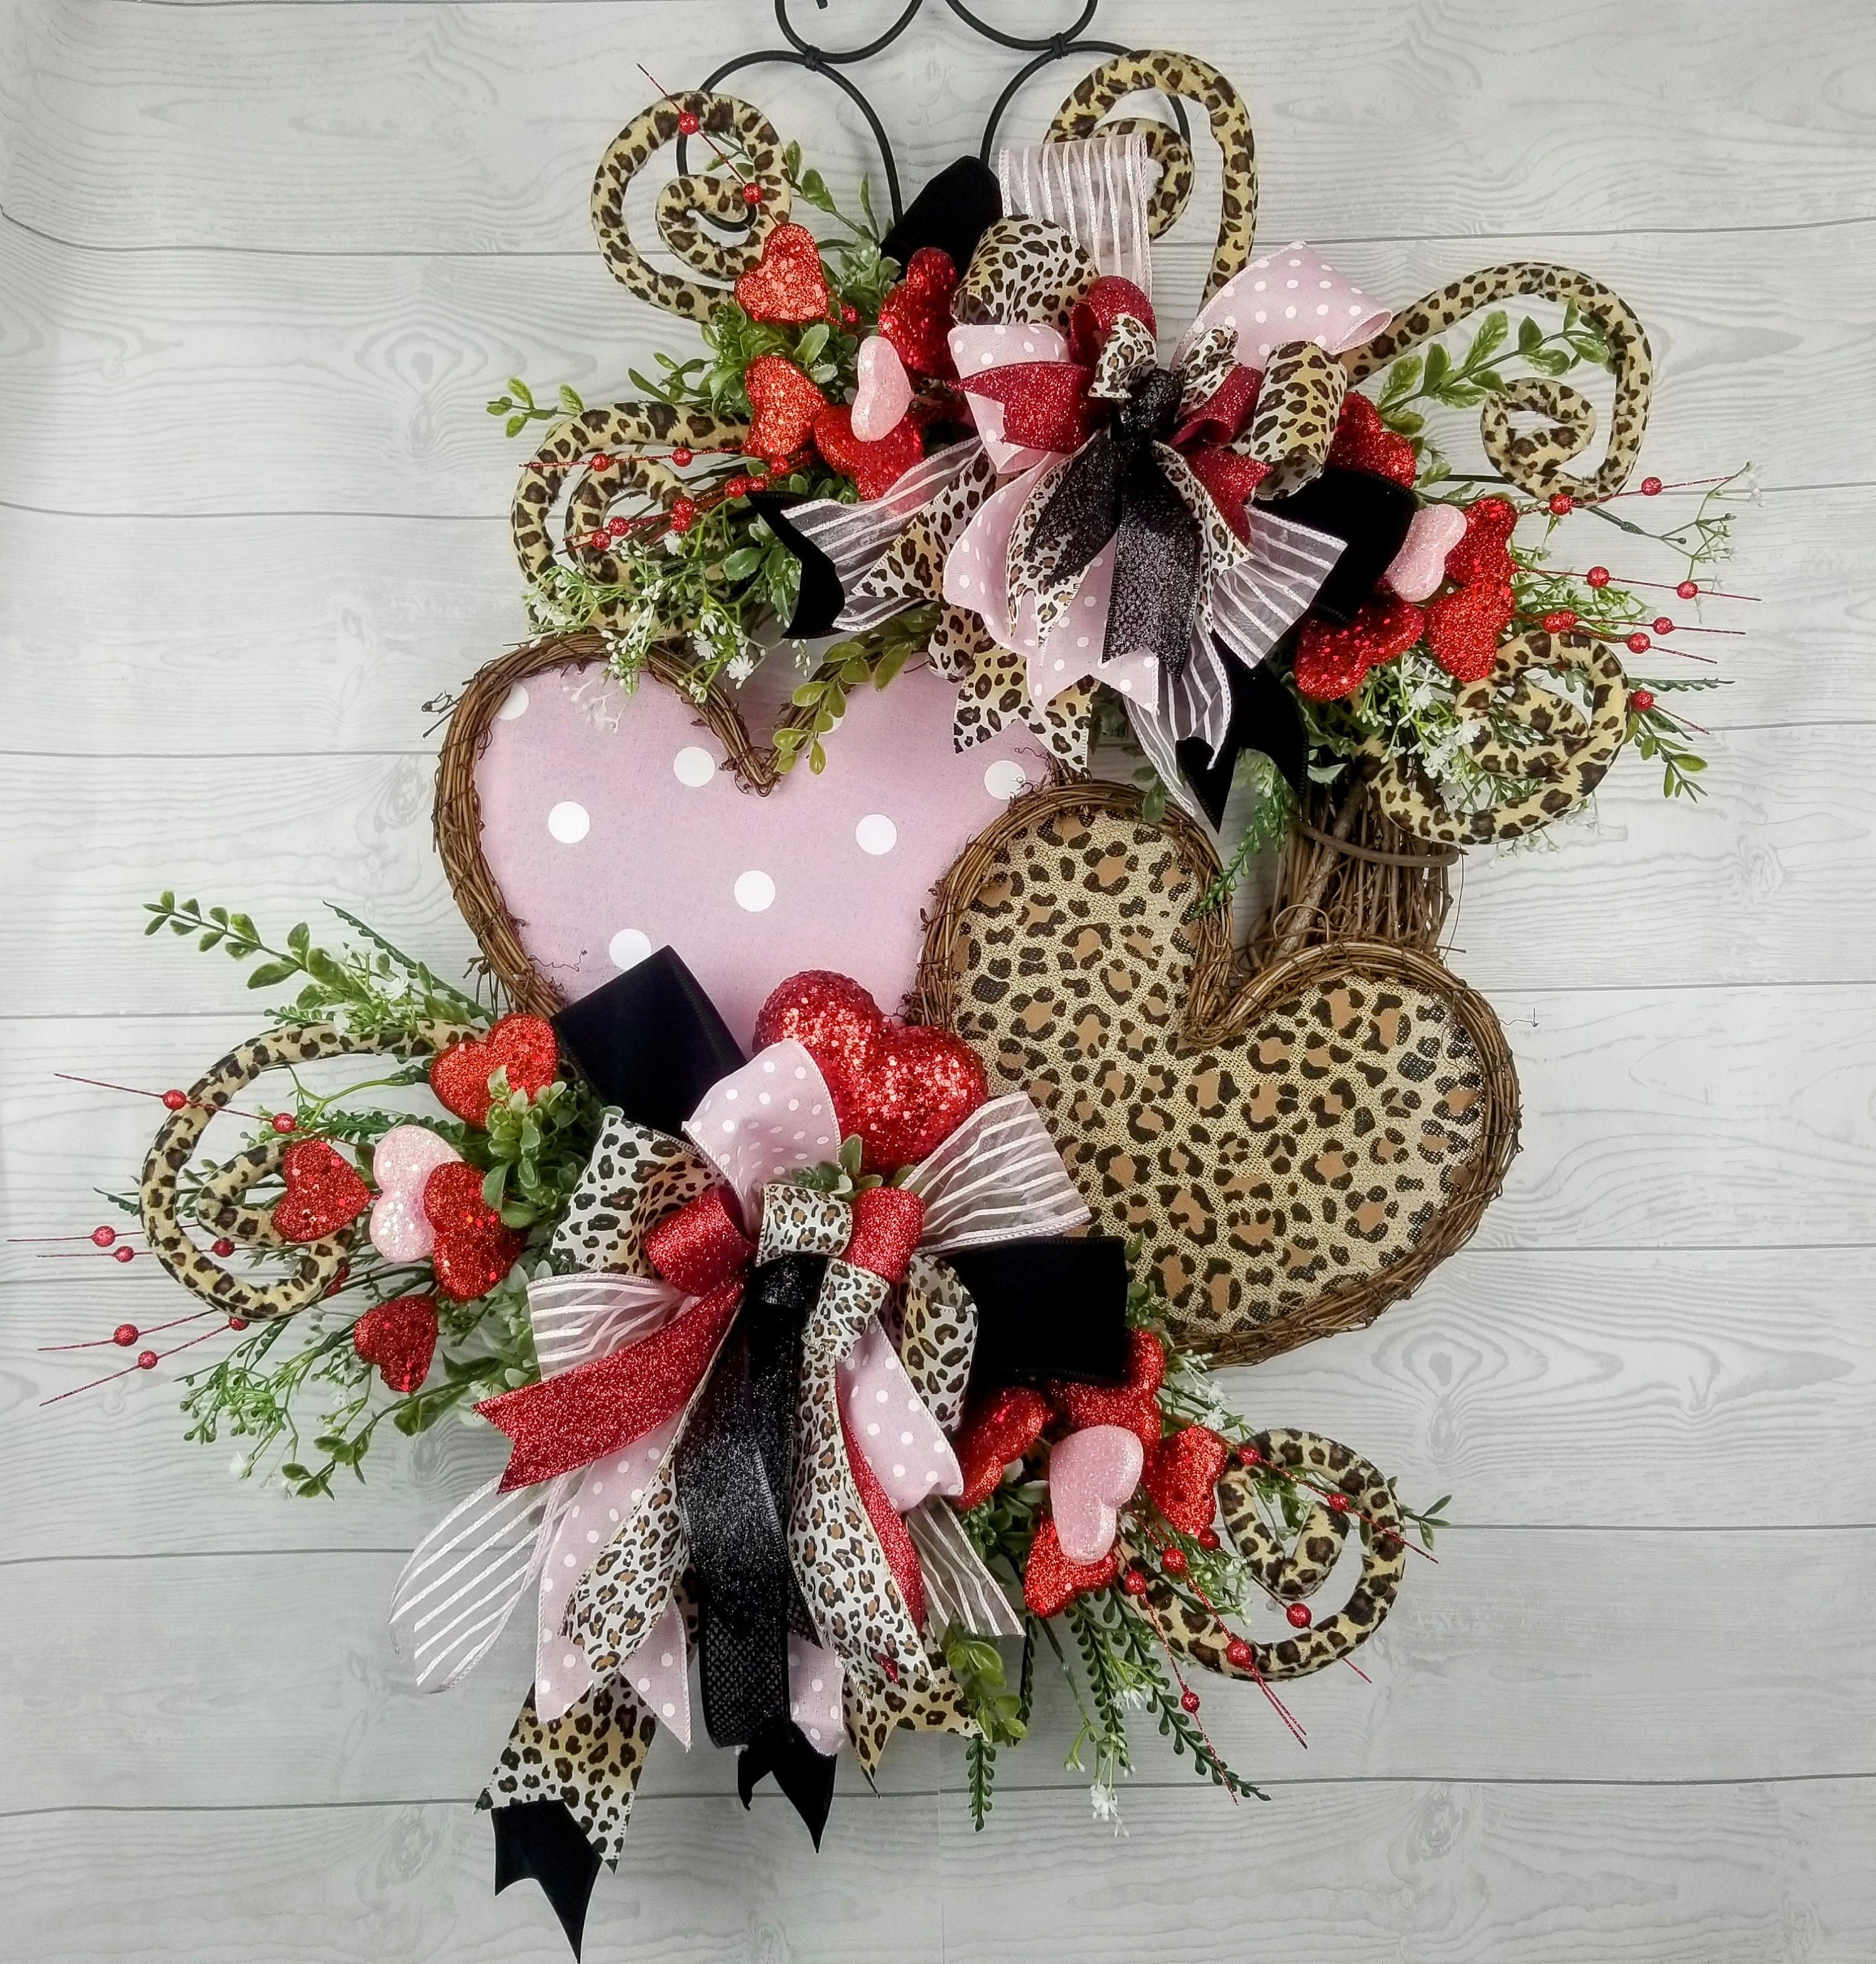 10 Valentine's Day Gift Ideas for Kids - The Homespun Hydrangea